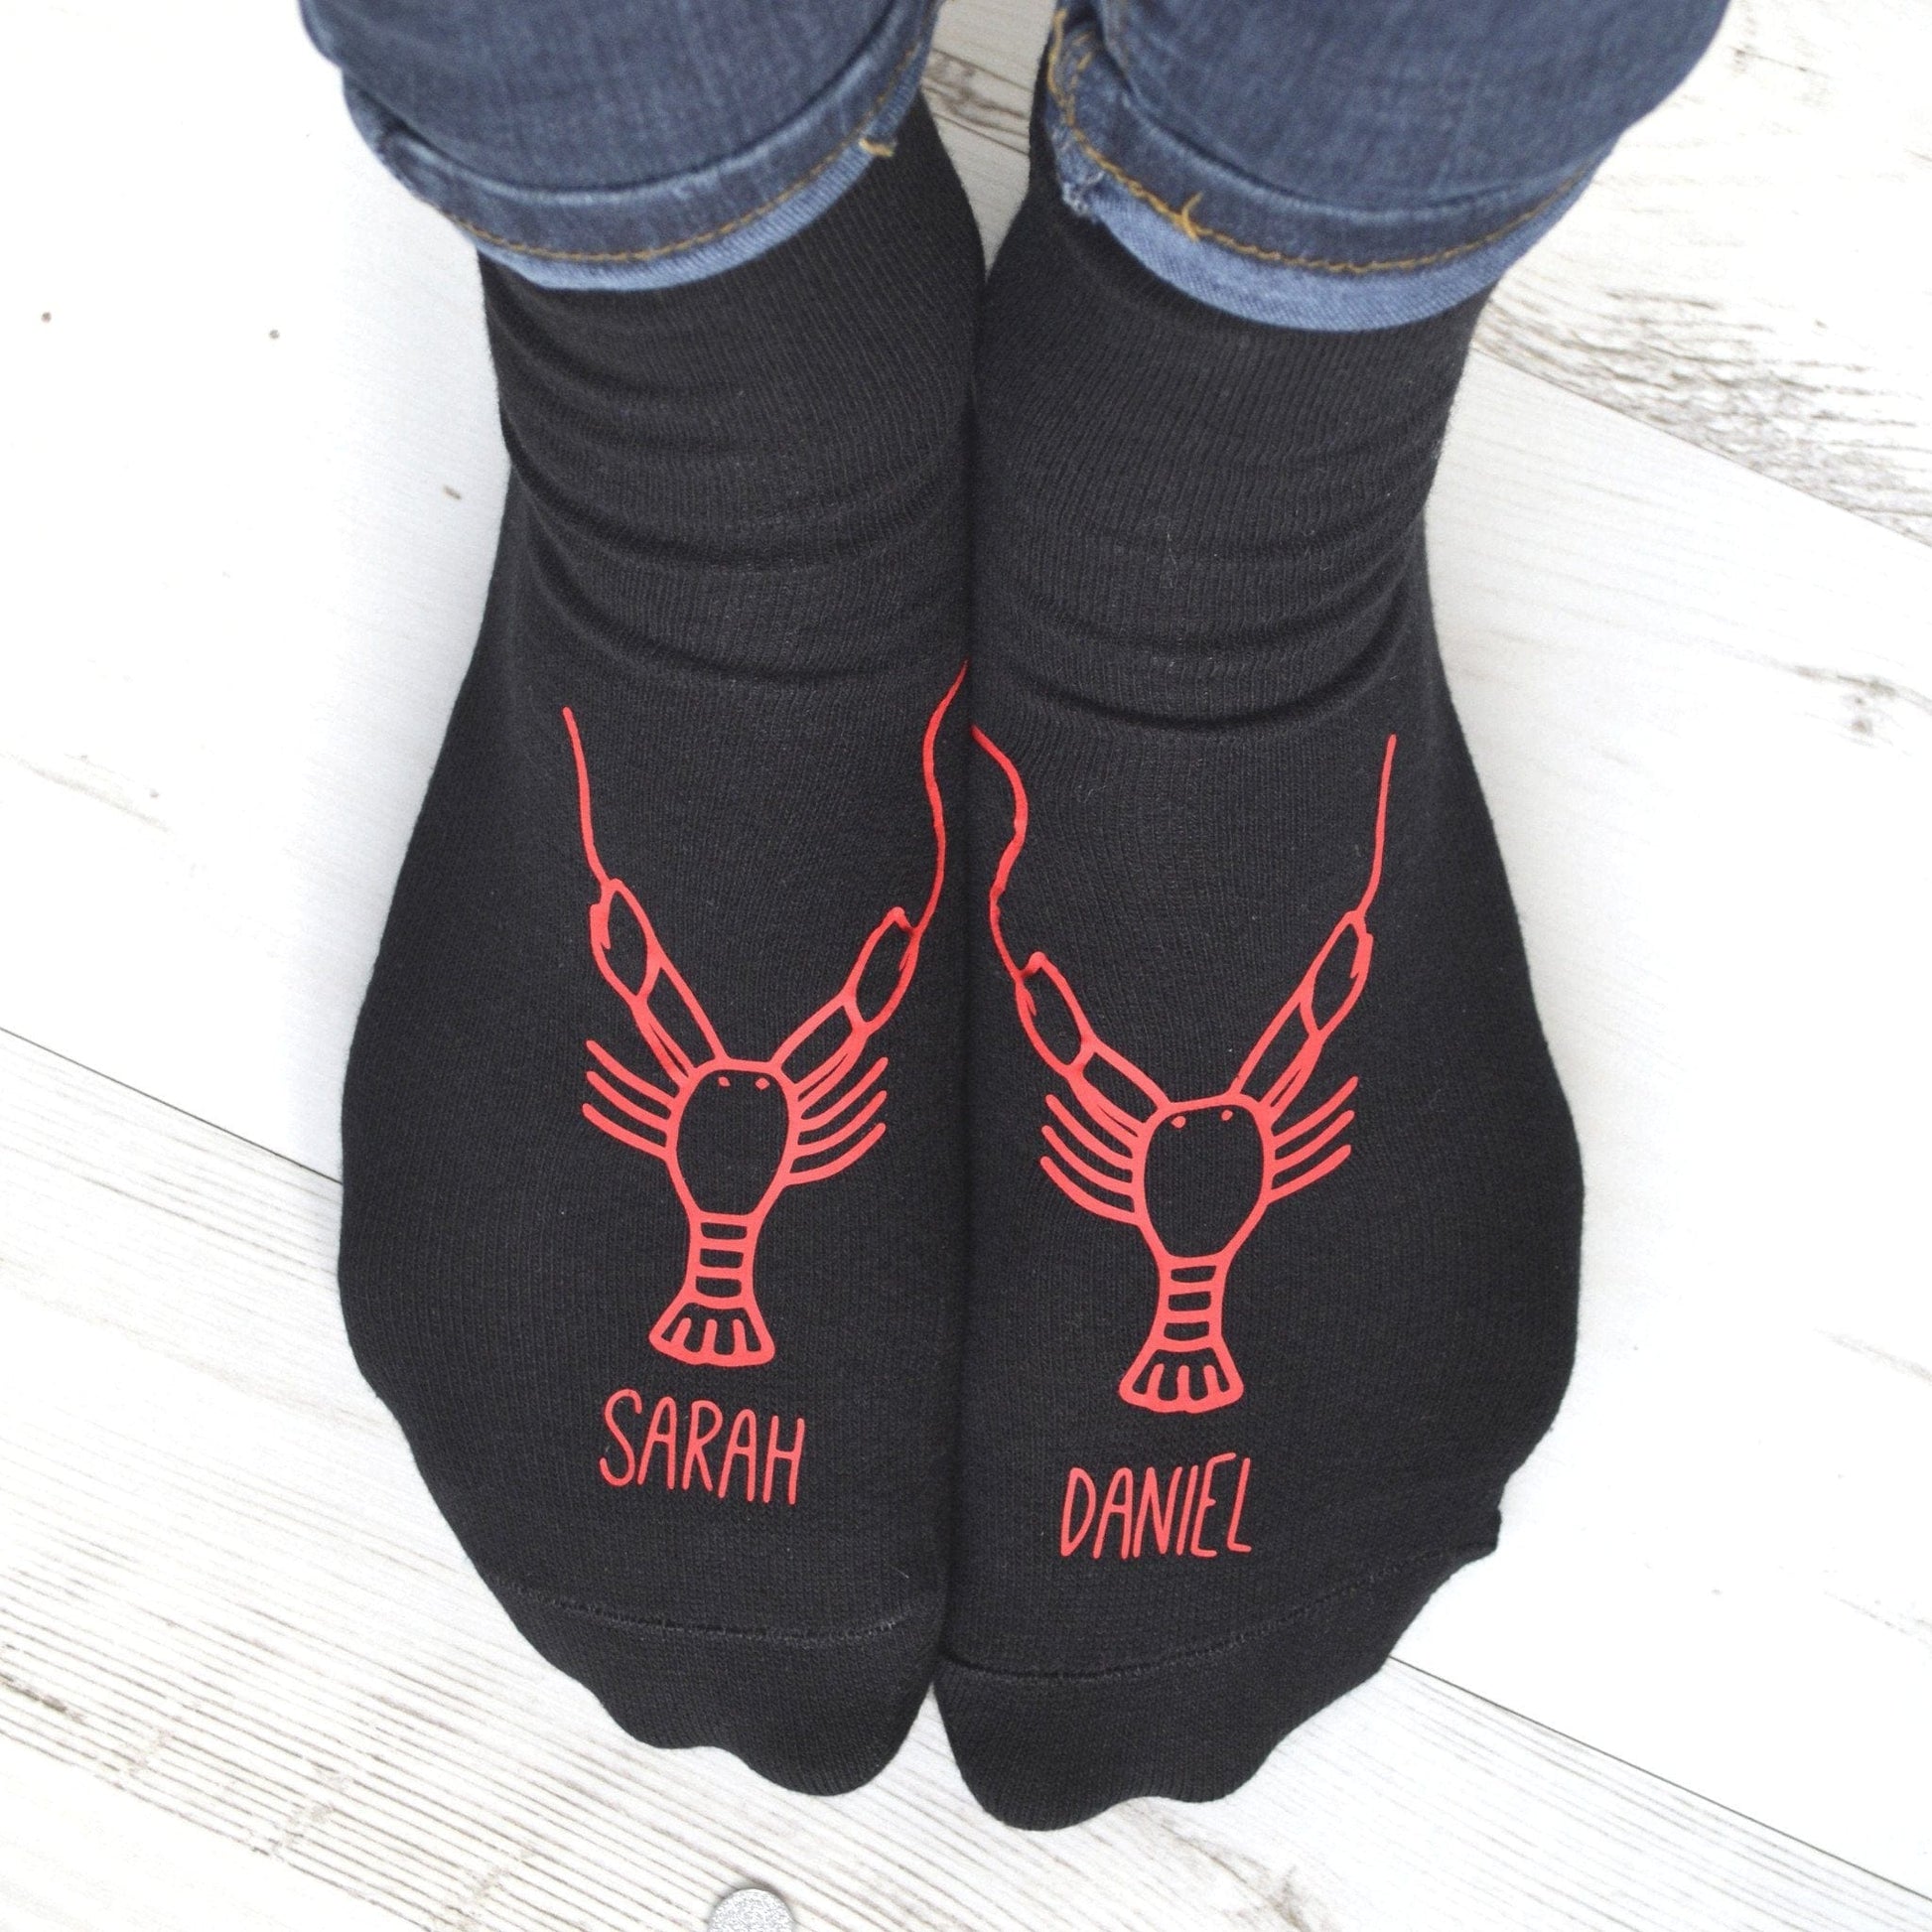 Personalised Gift Animal Socks - Lobster, socks, - ALPHS 